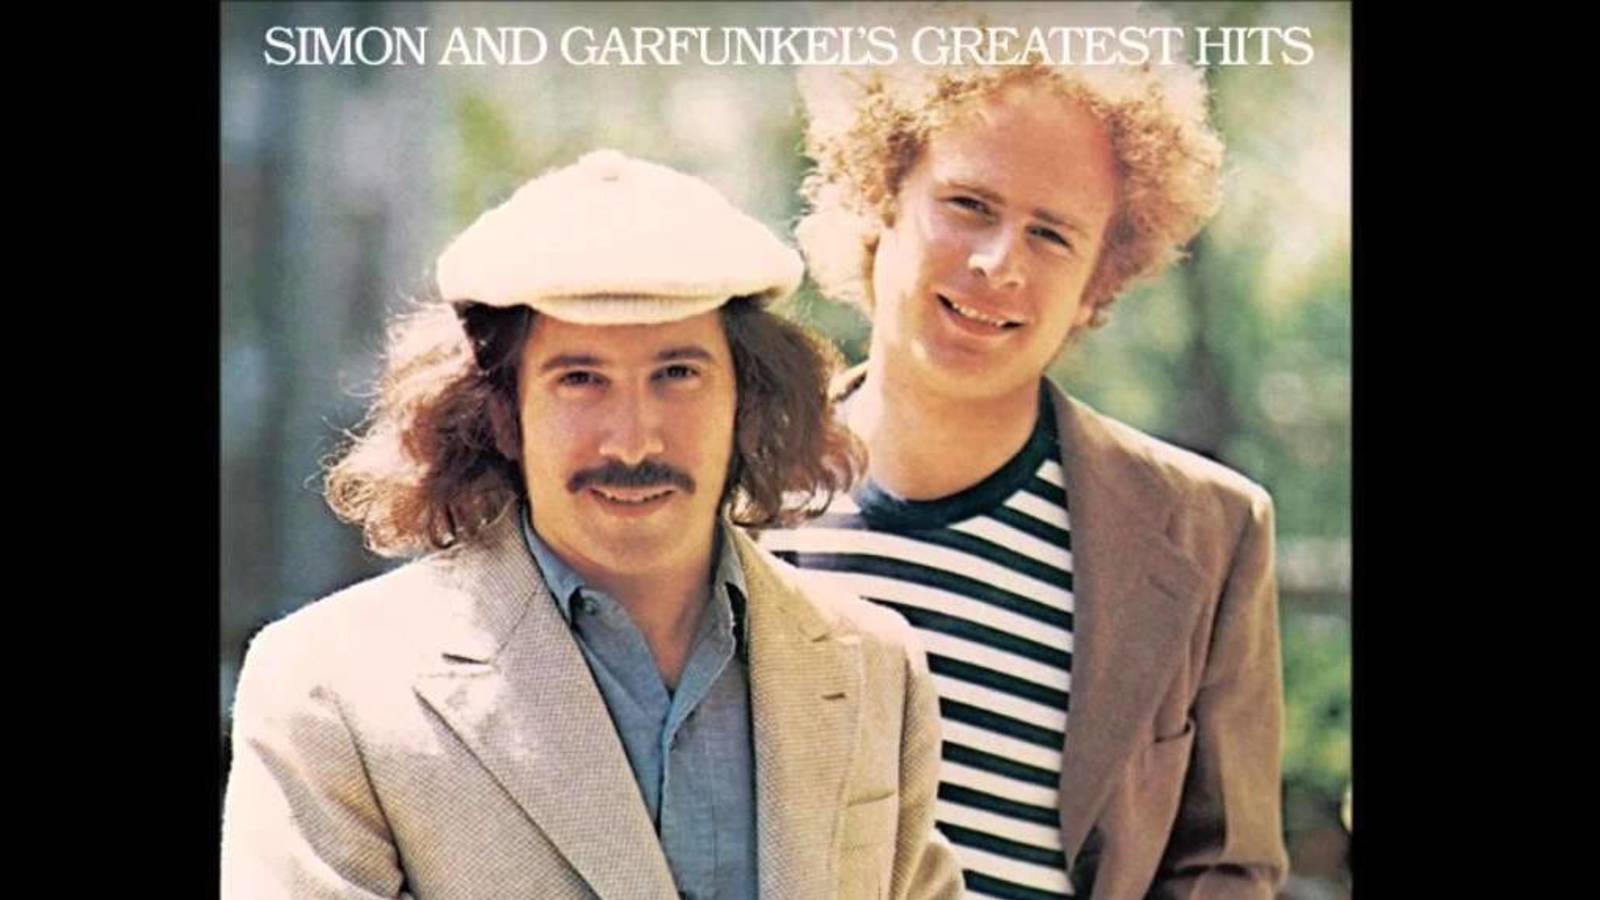 Simon & Garfunkel's Concert & Tour History